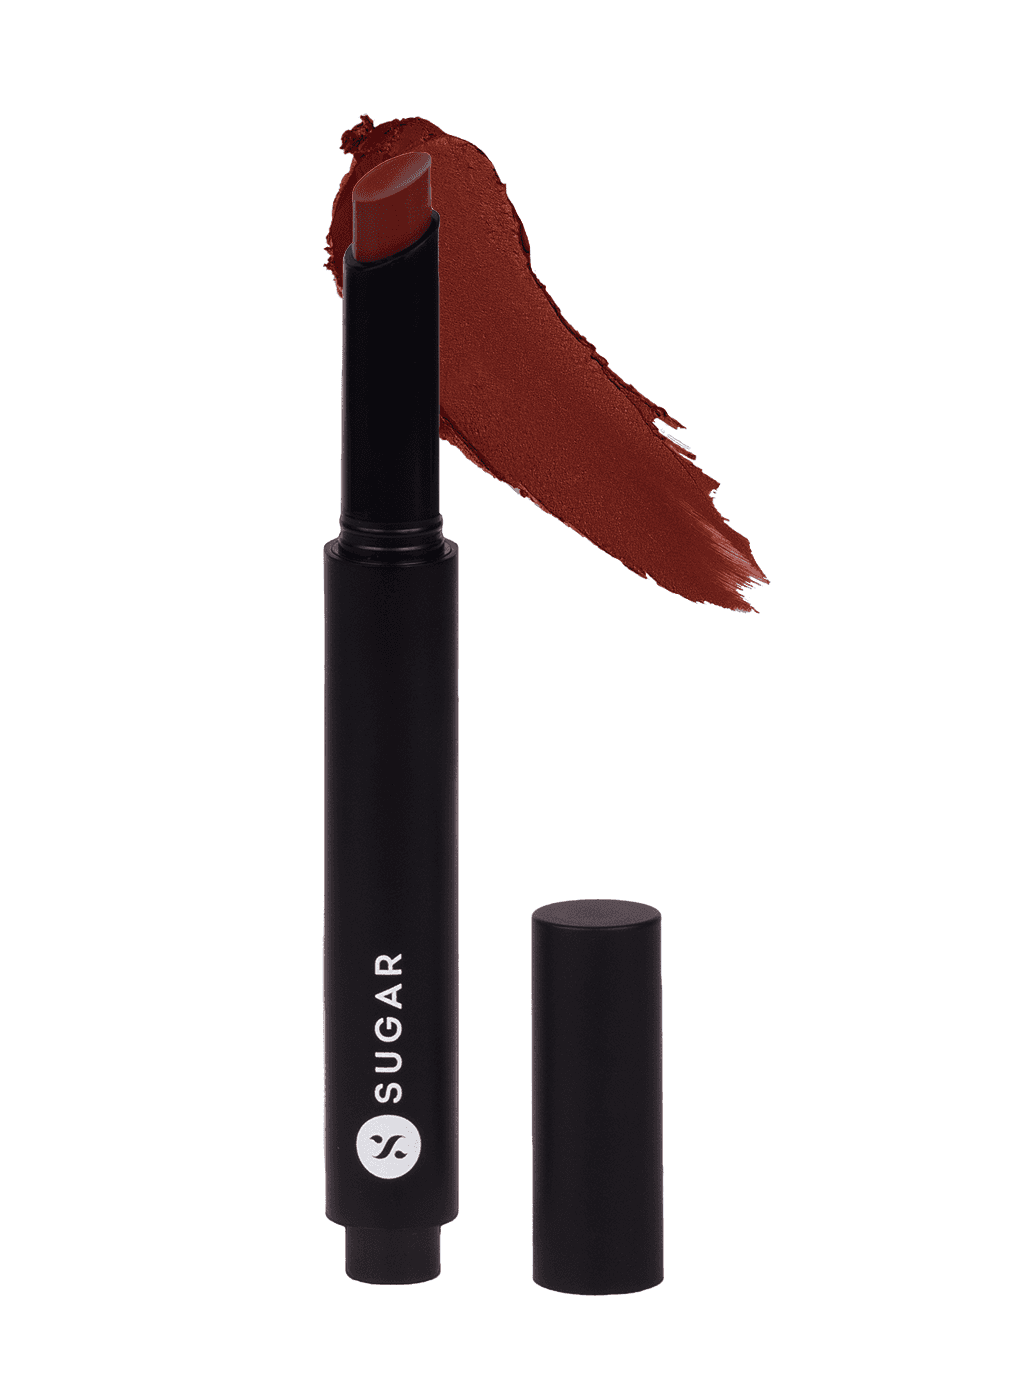 SUGAR Click Me Up Velvet Lipstick - 08 Smoking Sienna (Brown Toned Burnt Orange)